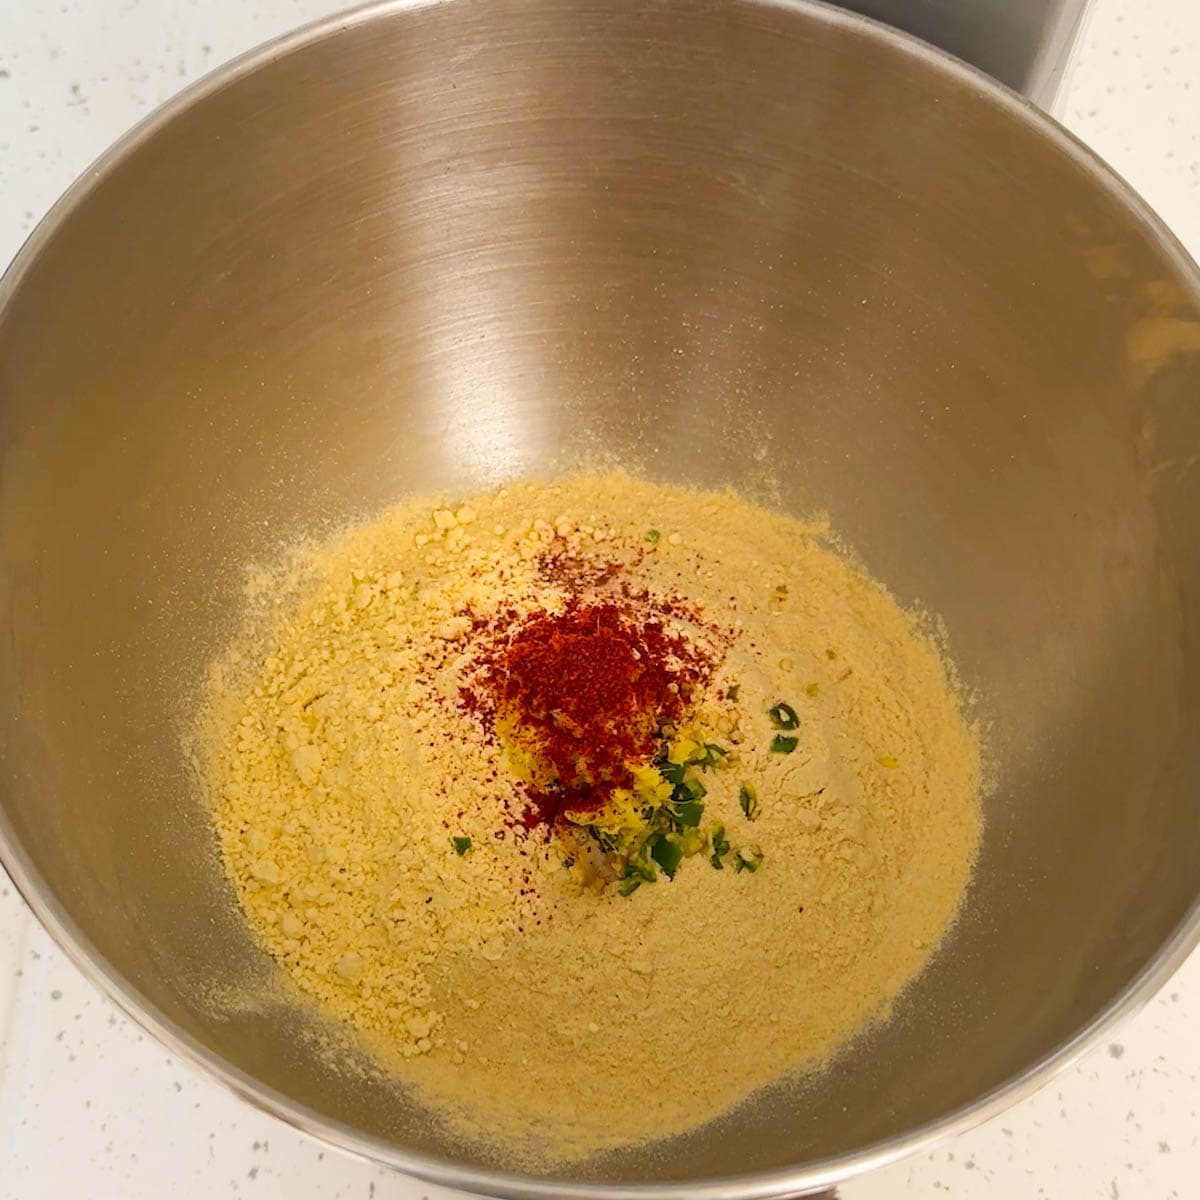 add Red Chili powder to the dough